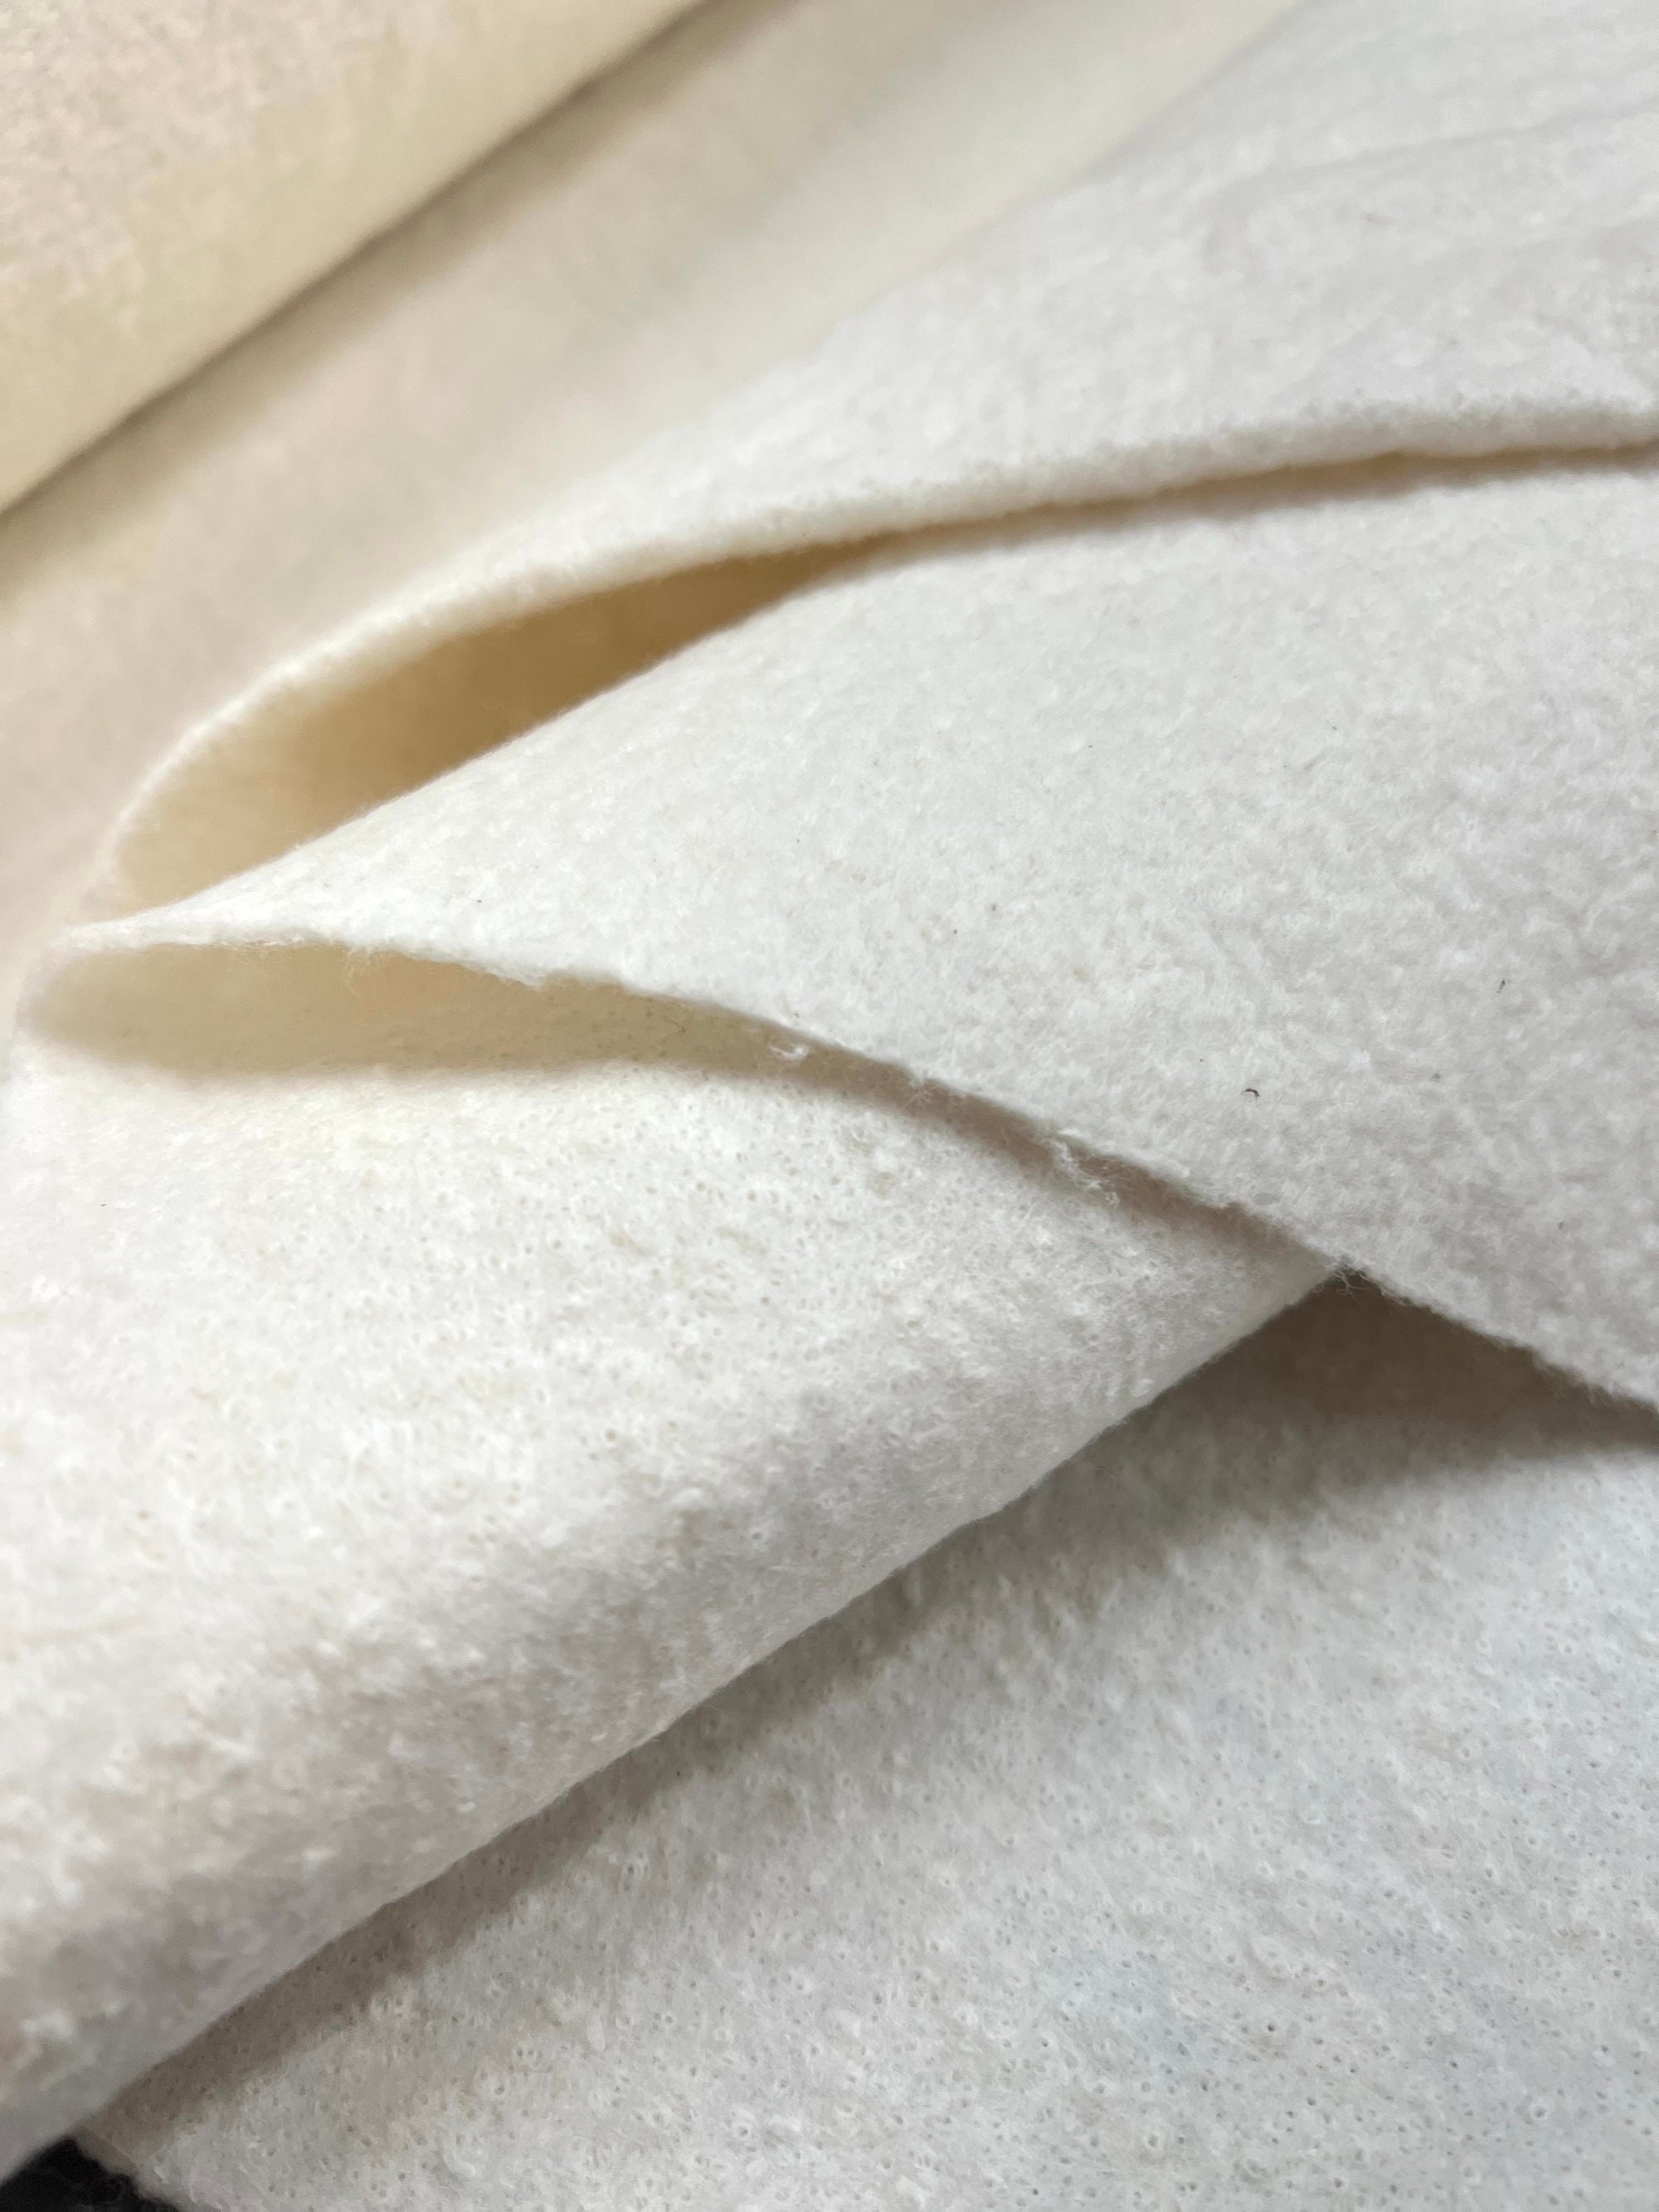 Pellon White Cotton Quilting Batting, 90 x 108 Queen Size Precut 